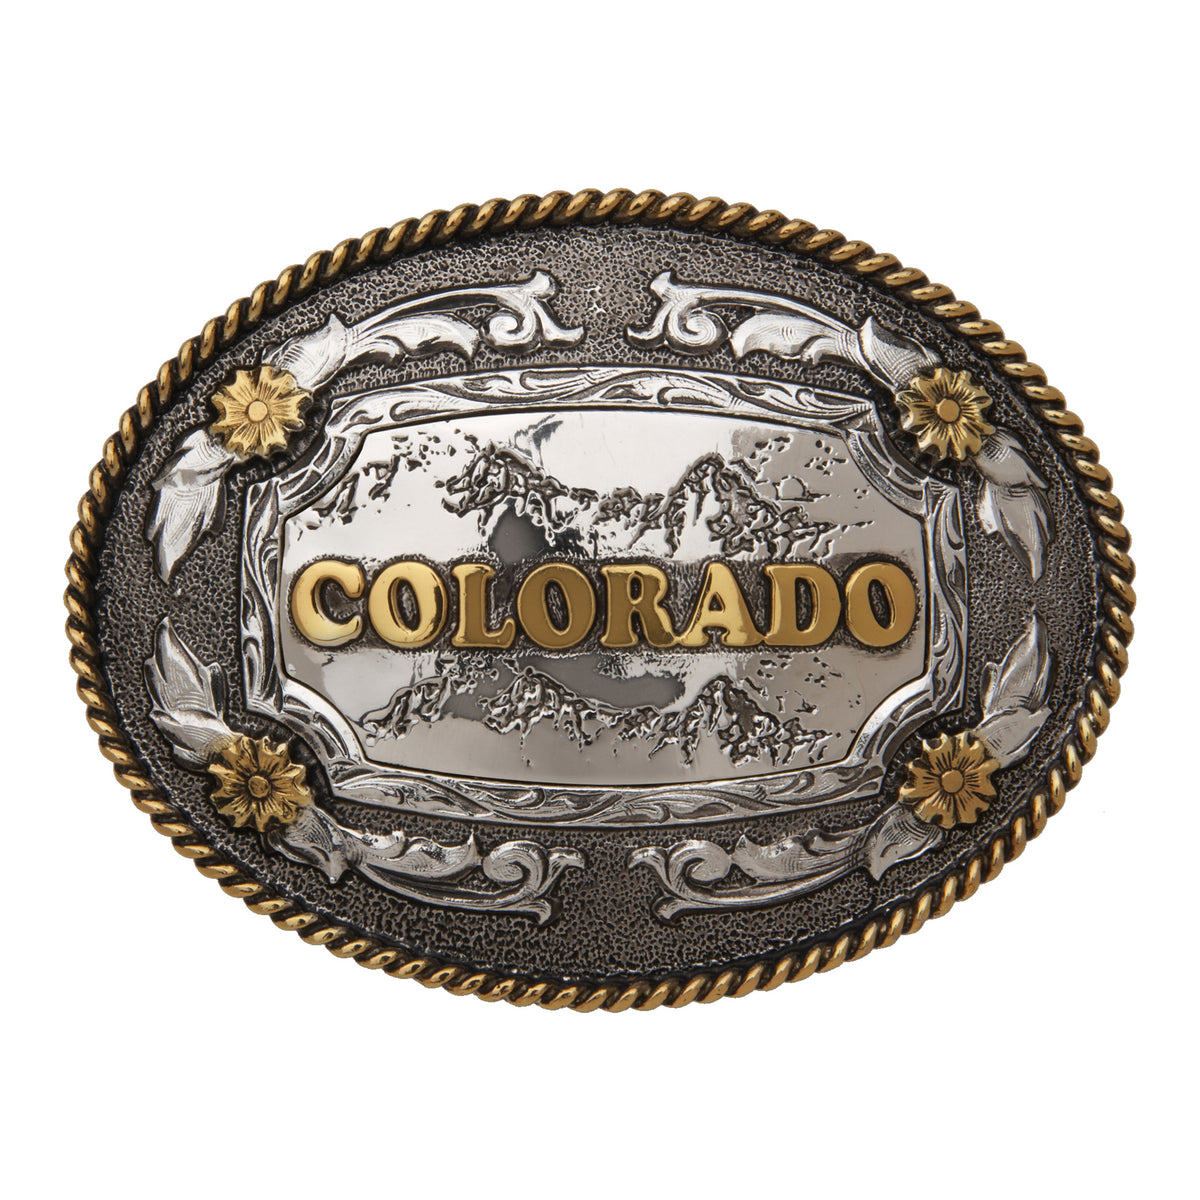 Colorado — Oval Rope Edge Buckle